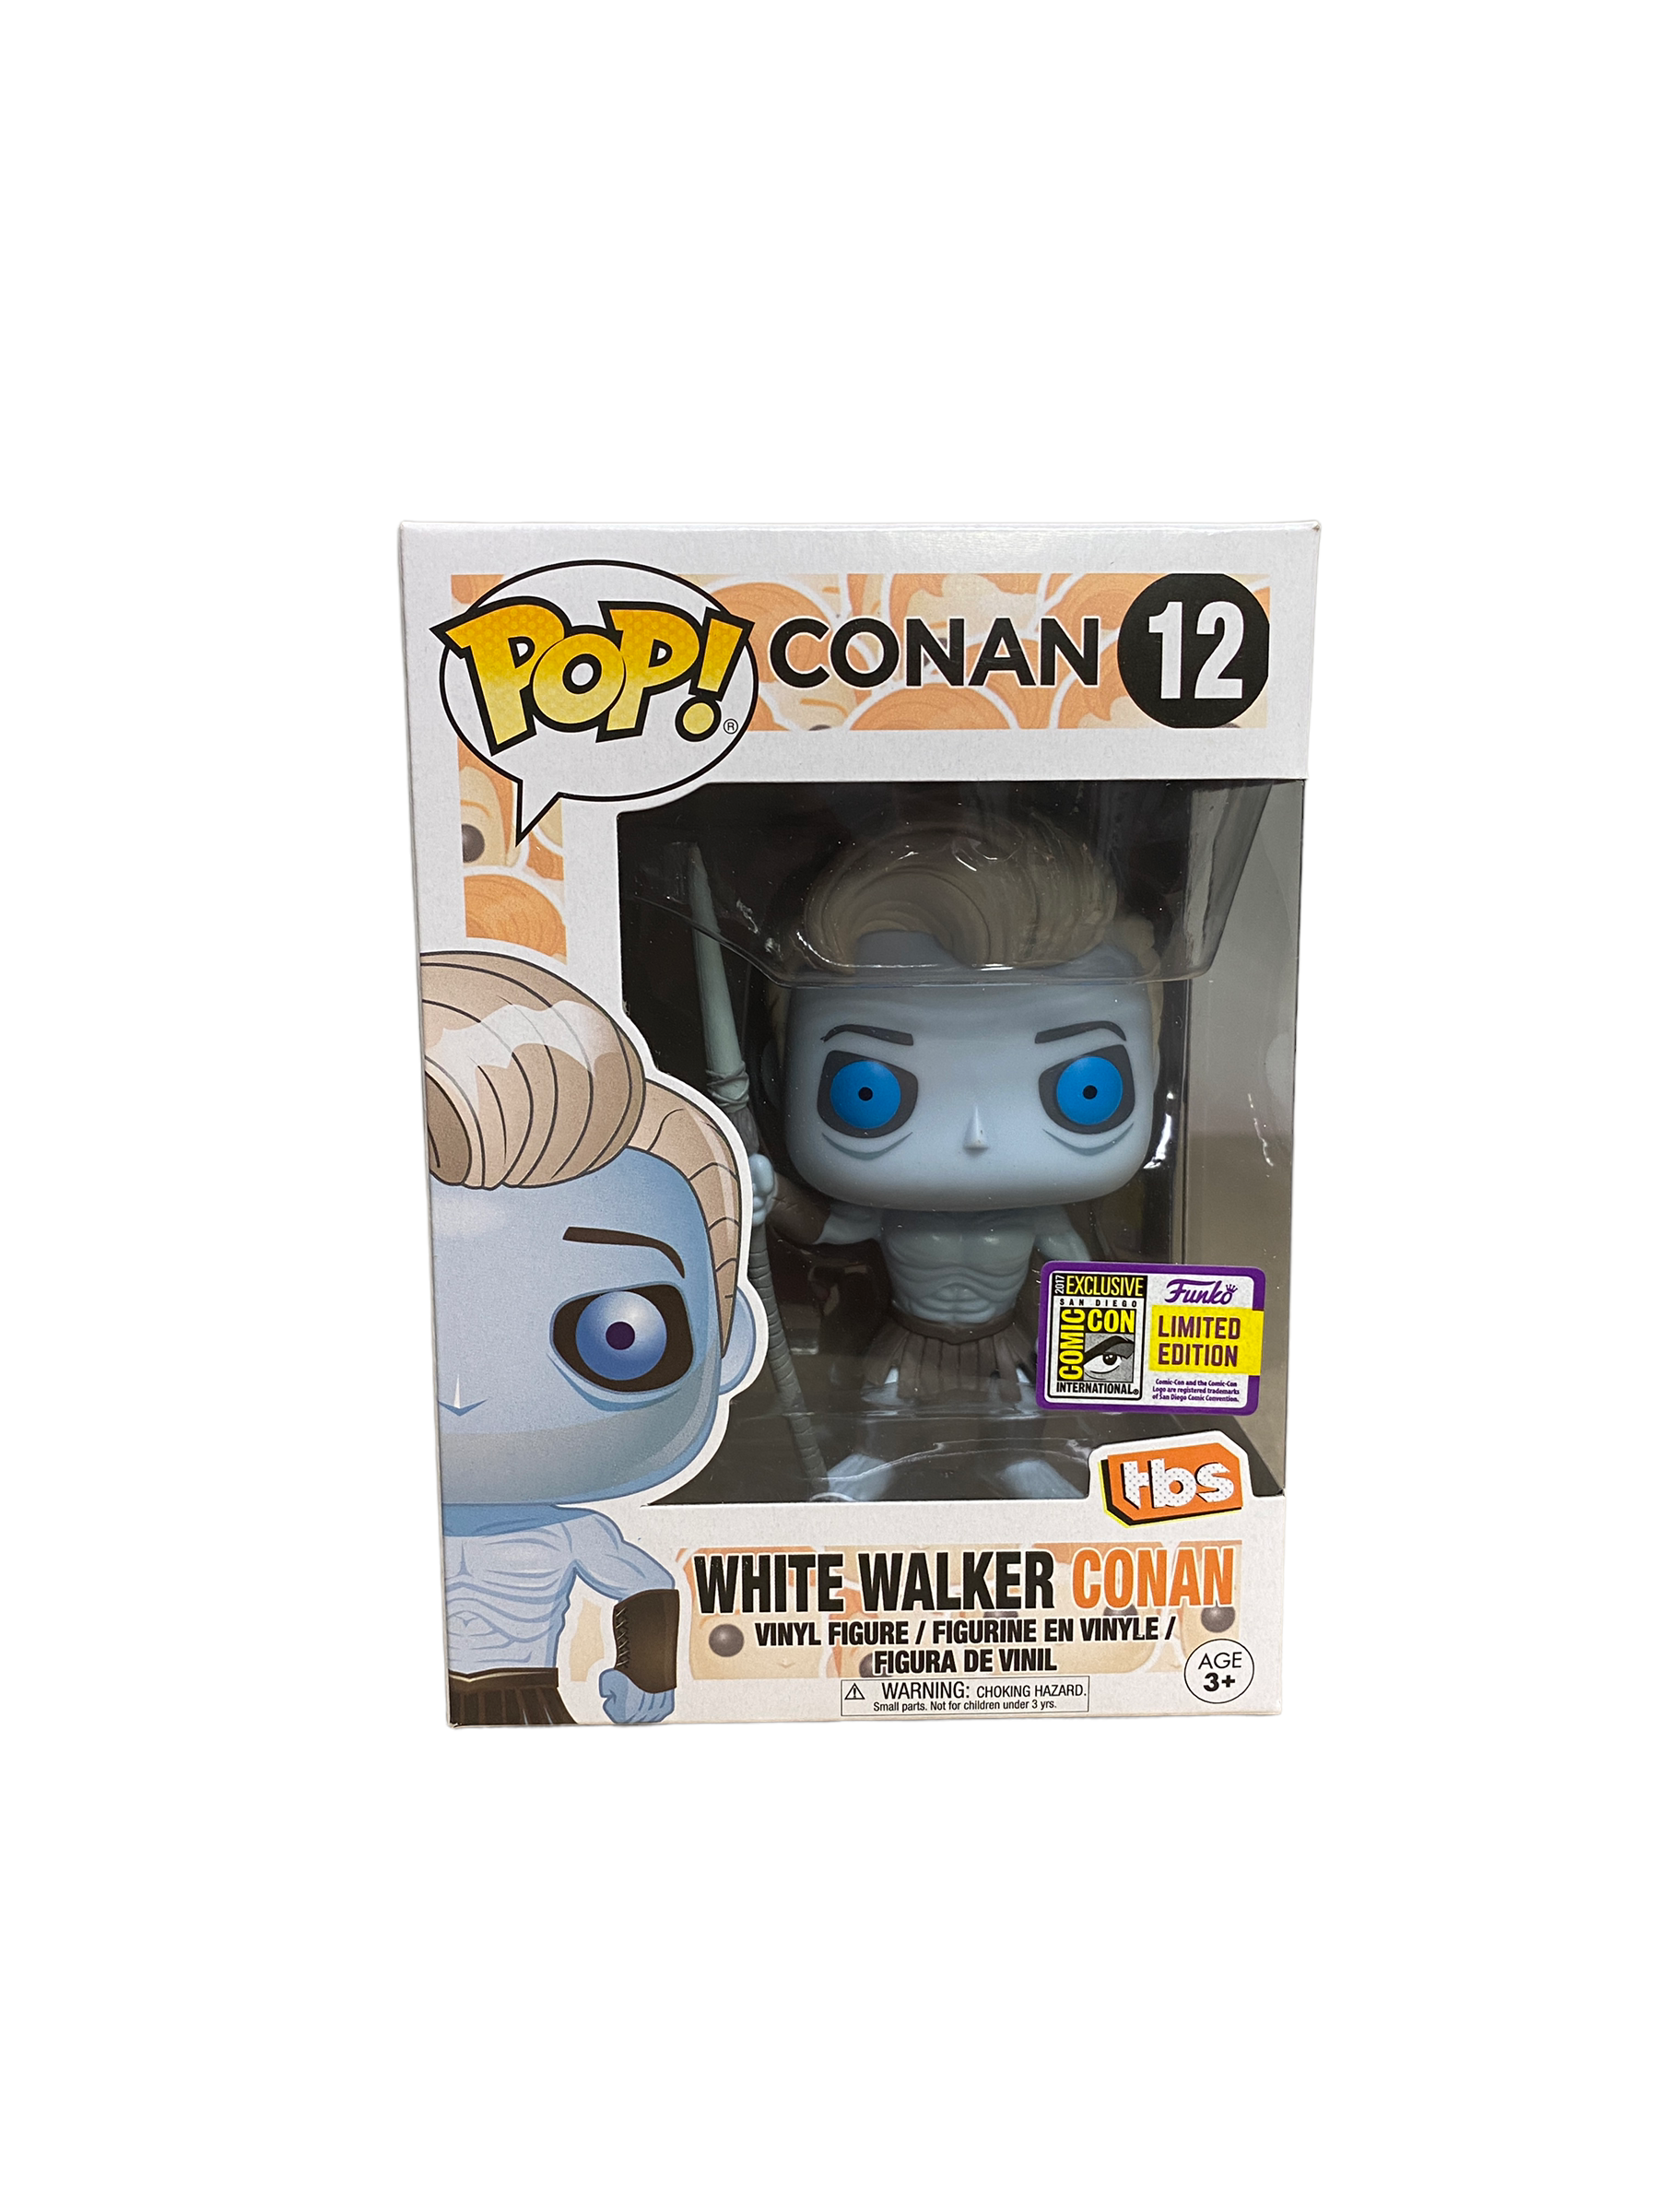 White Walker Conan #12 Funko Pop! - Conan / Game Of Thrones - SDCC 2017 Exclusive - Condition 9.5/10